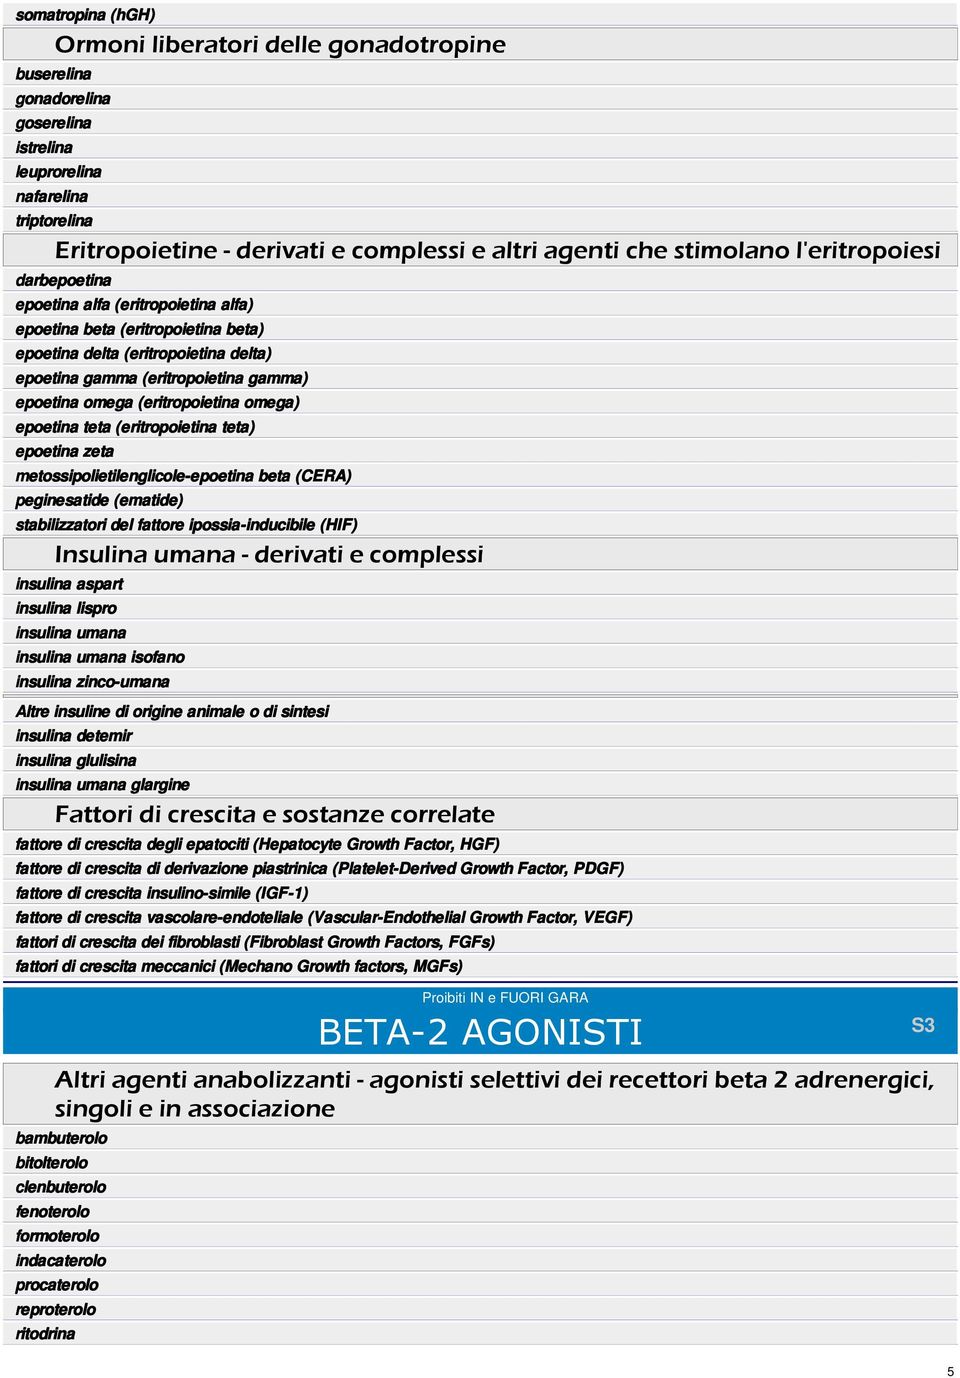 omega (eritropoietina omega) epoetina teta (eritropoietina teta) epoetina zeta metossipolietilenglicole-epoetina beta (CERA) peginesatide (ematide) stabilizzatori del fattore ipossia-inducibile (HF)